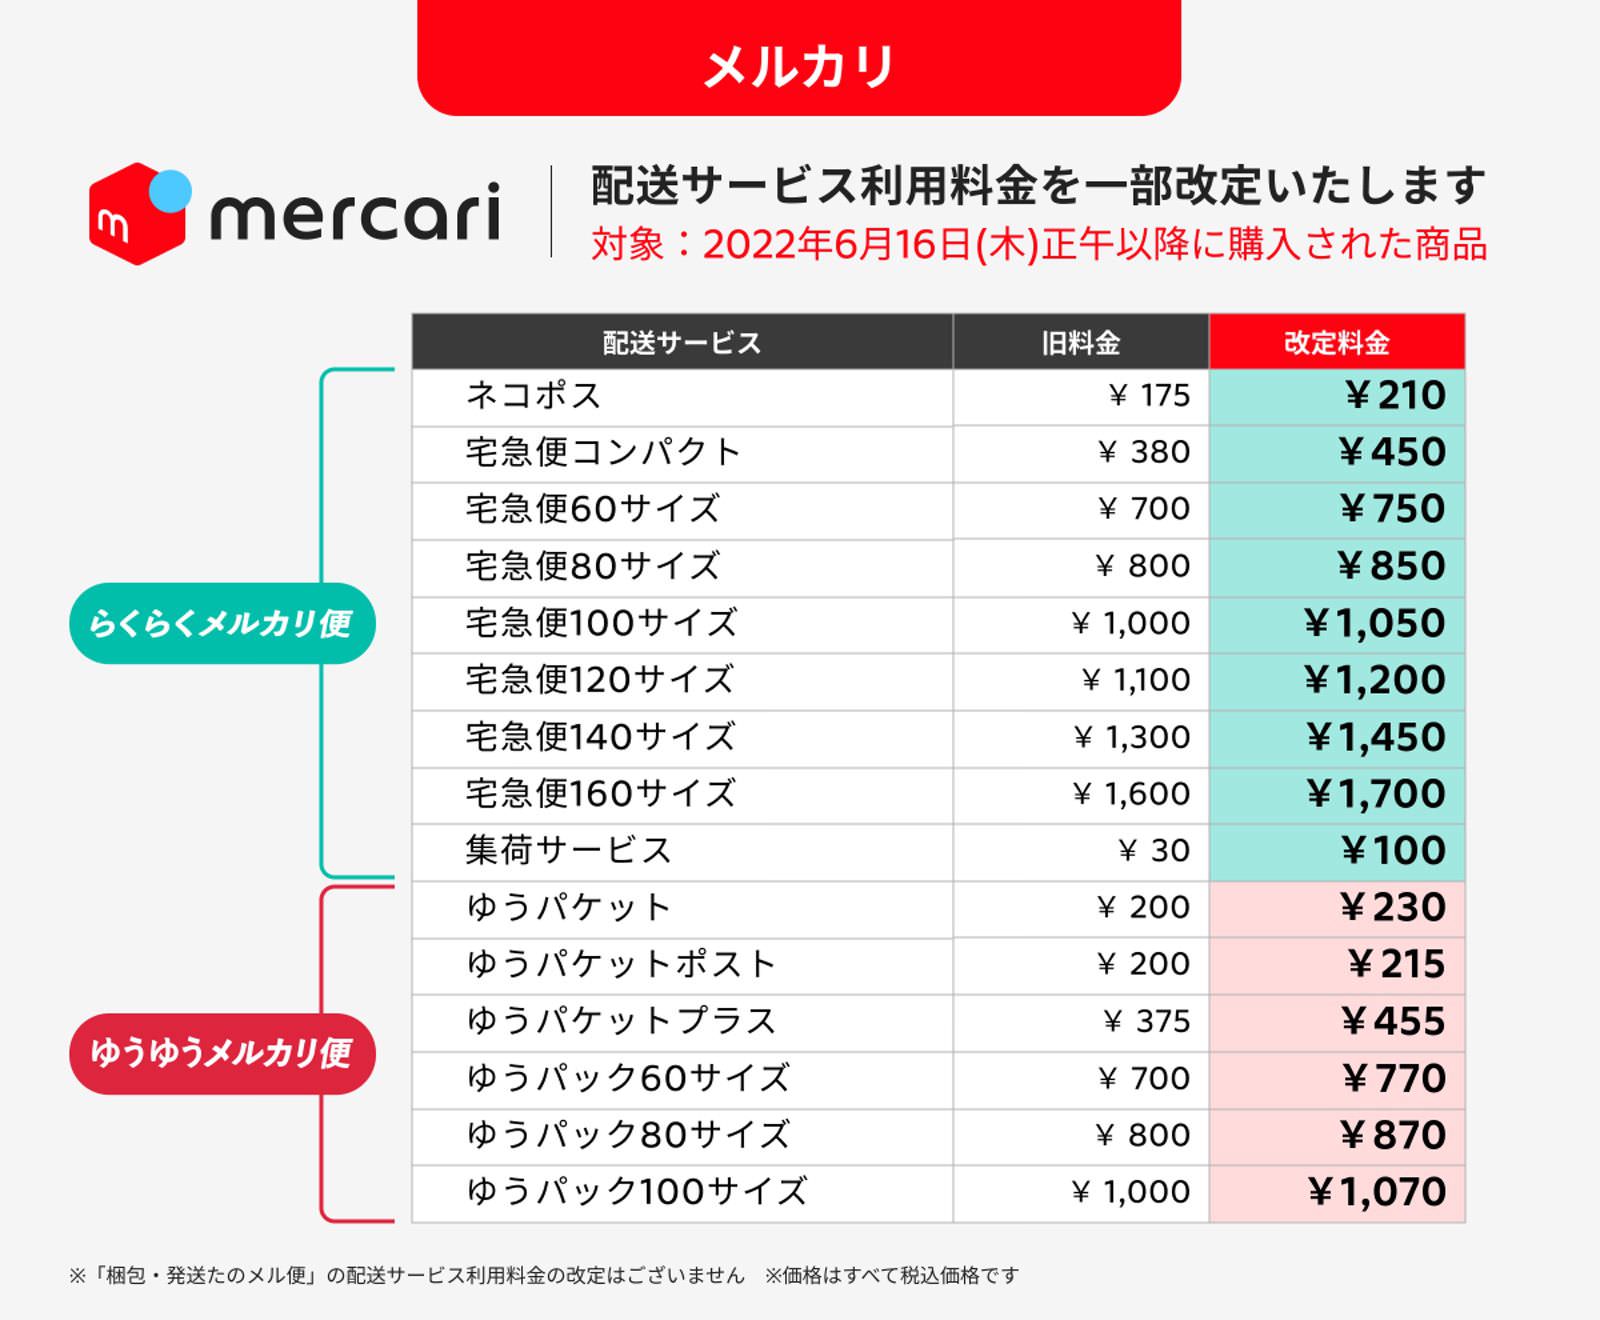 Mercari shipping fee raise from june6 02